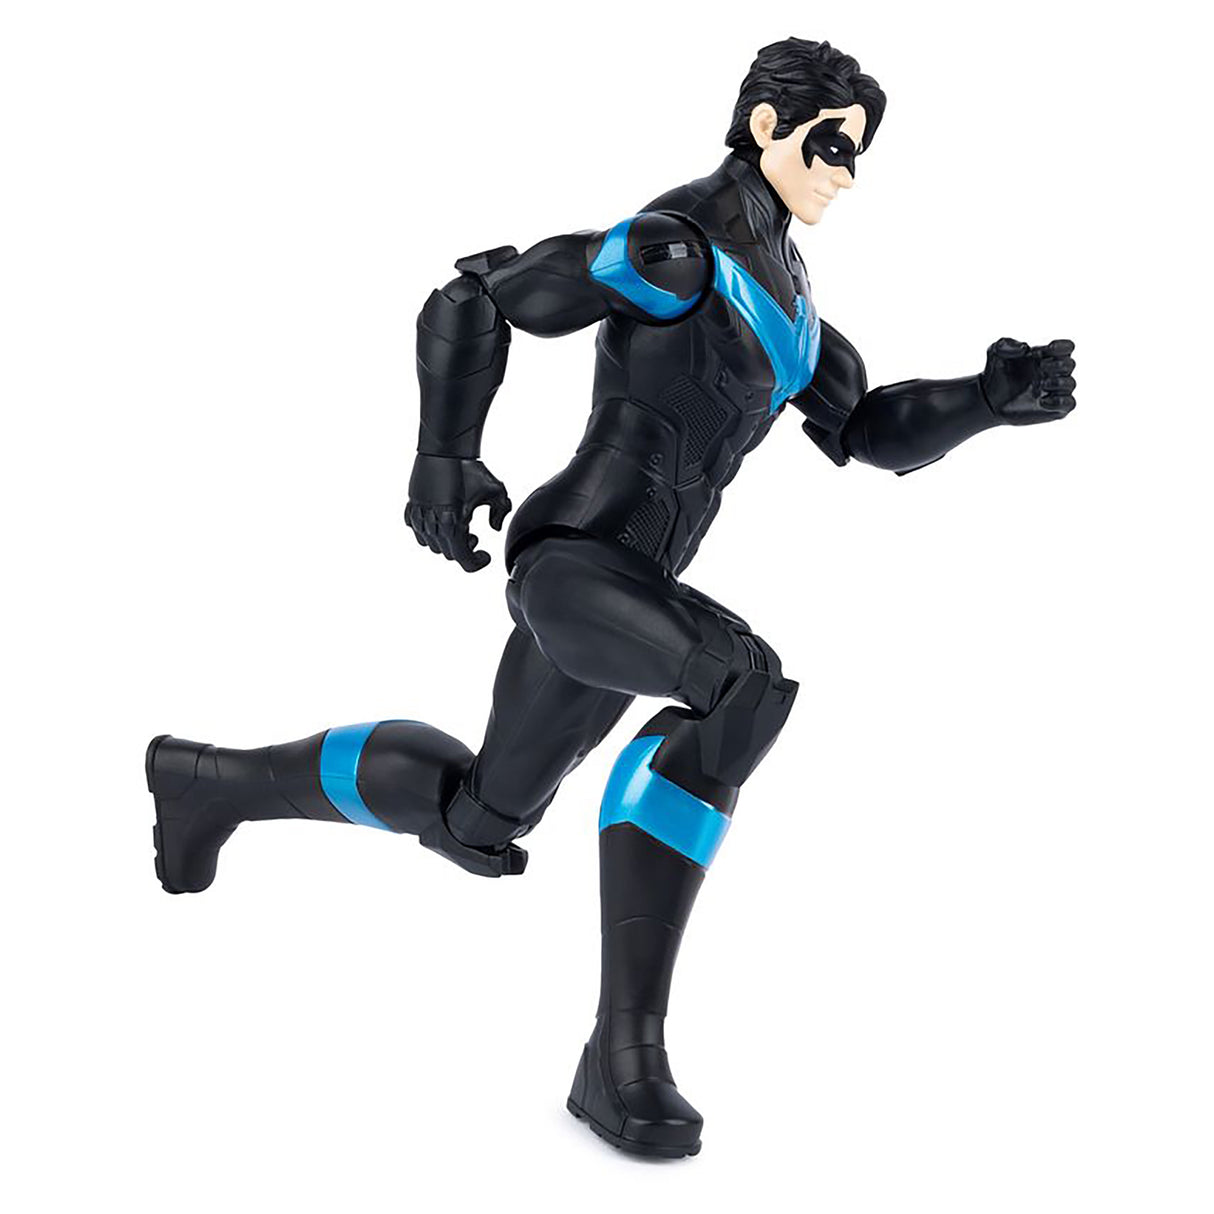 DC Batman Figurine Stealth Armor Nightwing Figure (12 inches)